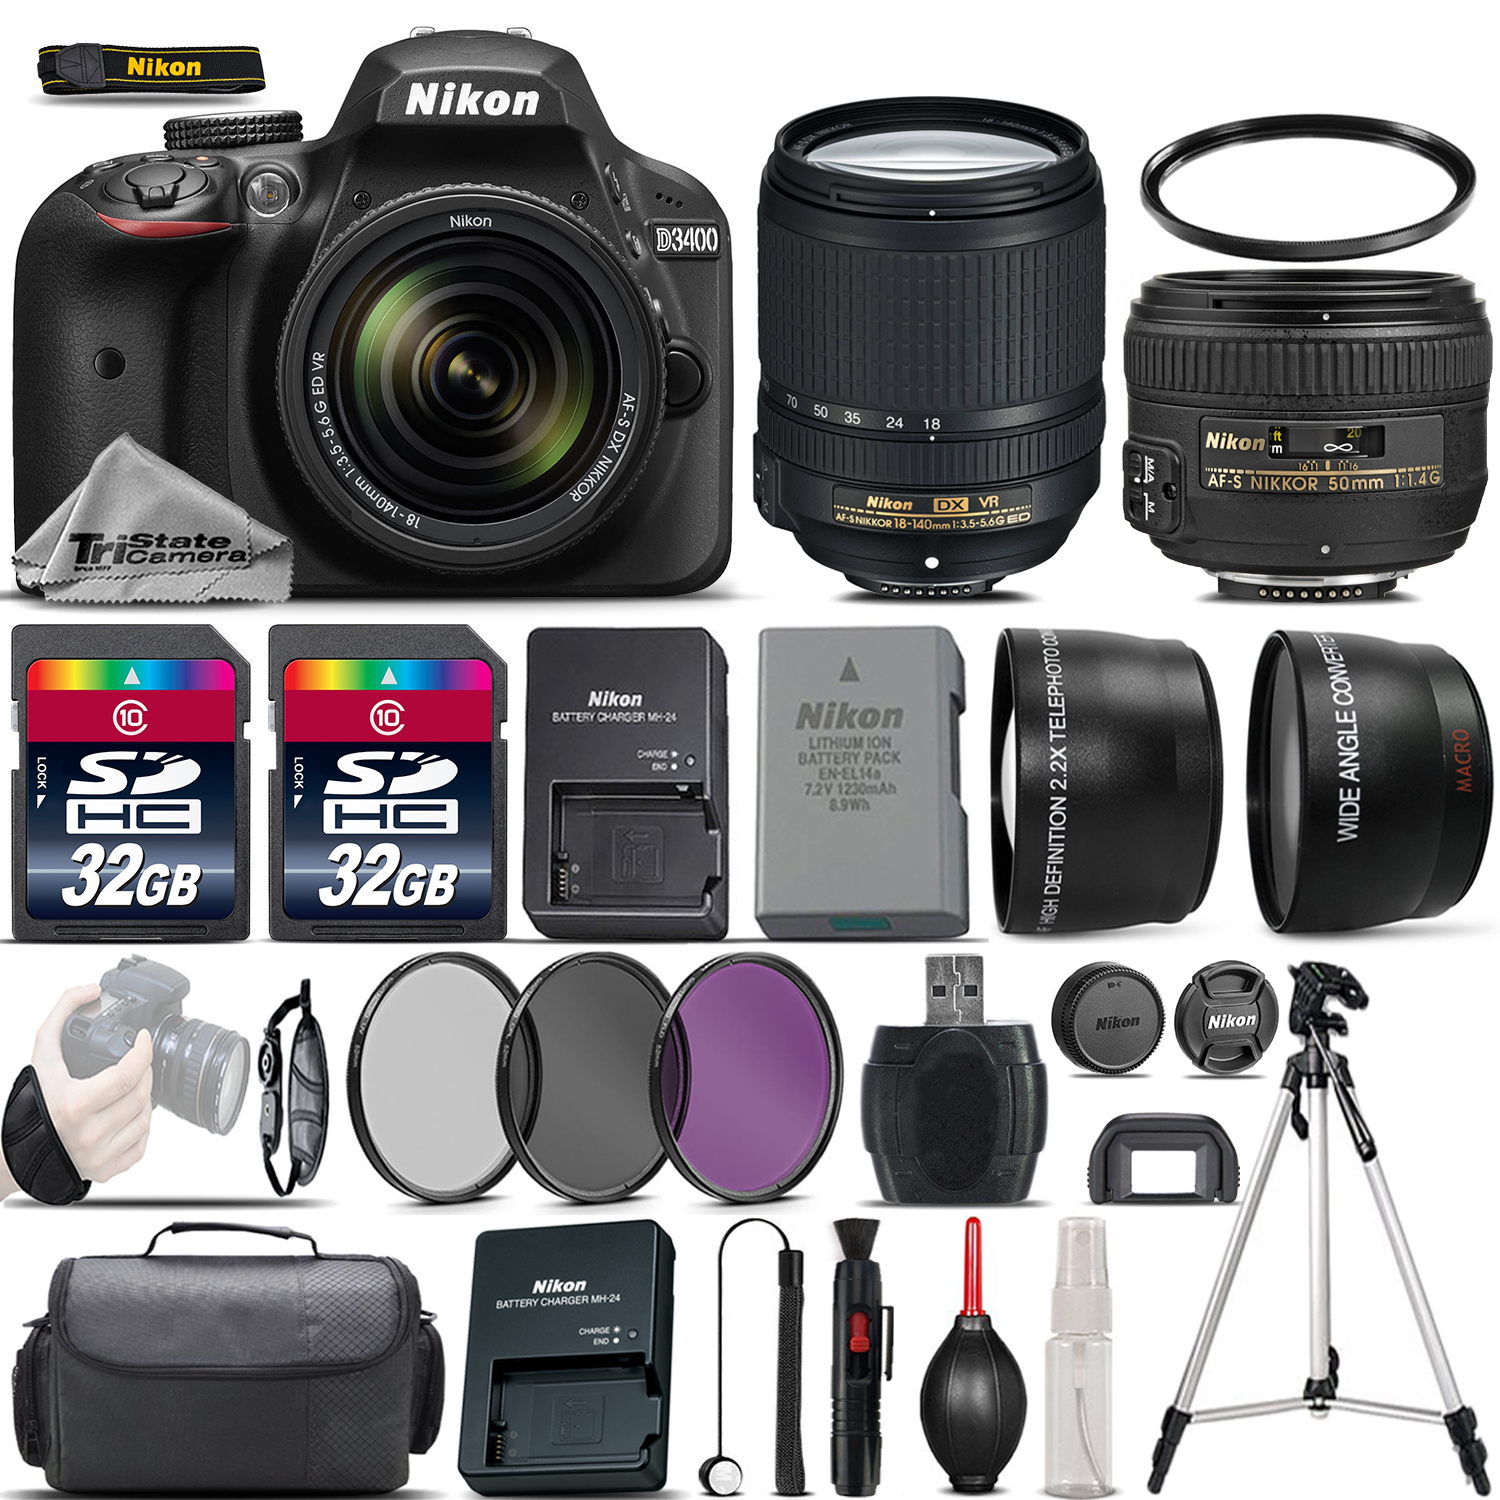 D3400 DSLR Camera Black + 18-140mm VR + 50mm 1.4G Lens + 64GB -4 Lens Kit *FREE SHIPPING*